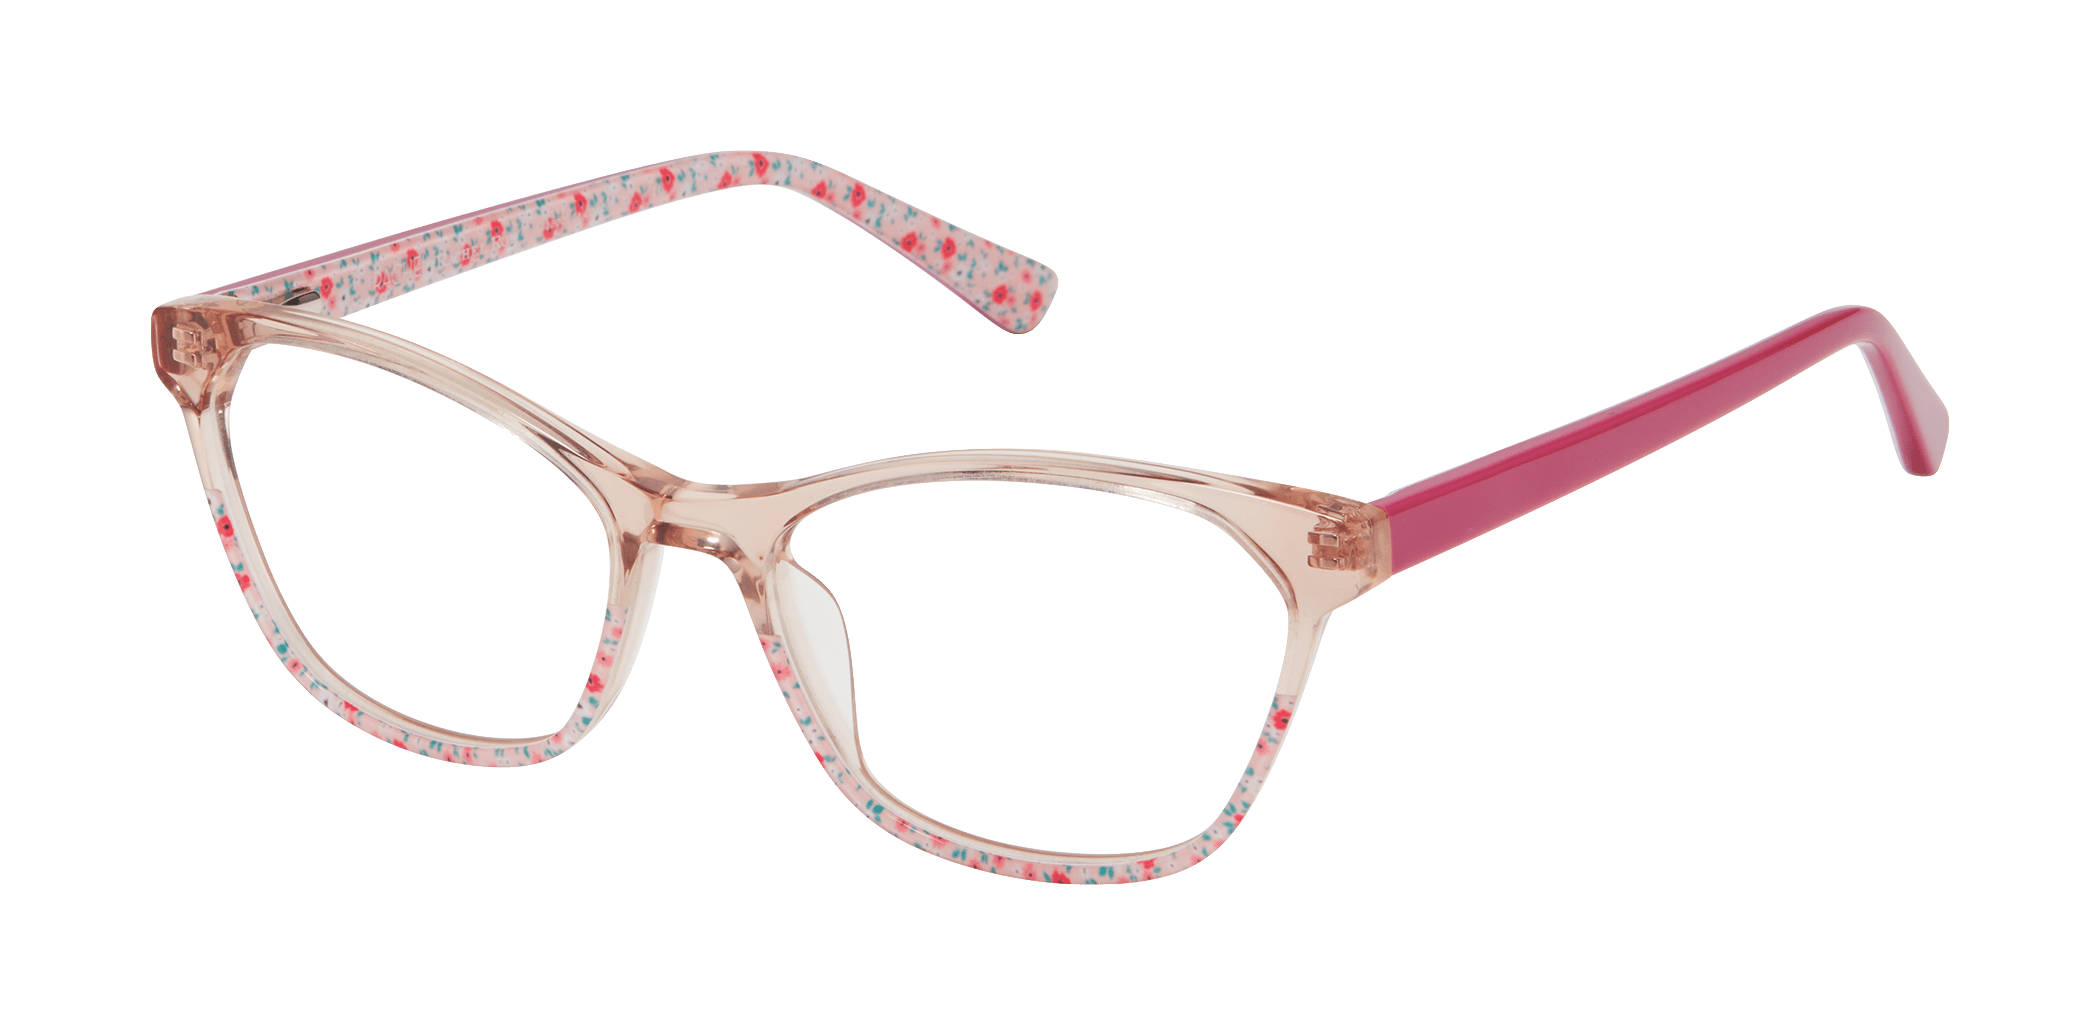 RACHEL Rachel Roy ADORED frames in the color Blush by A&A Optical